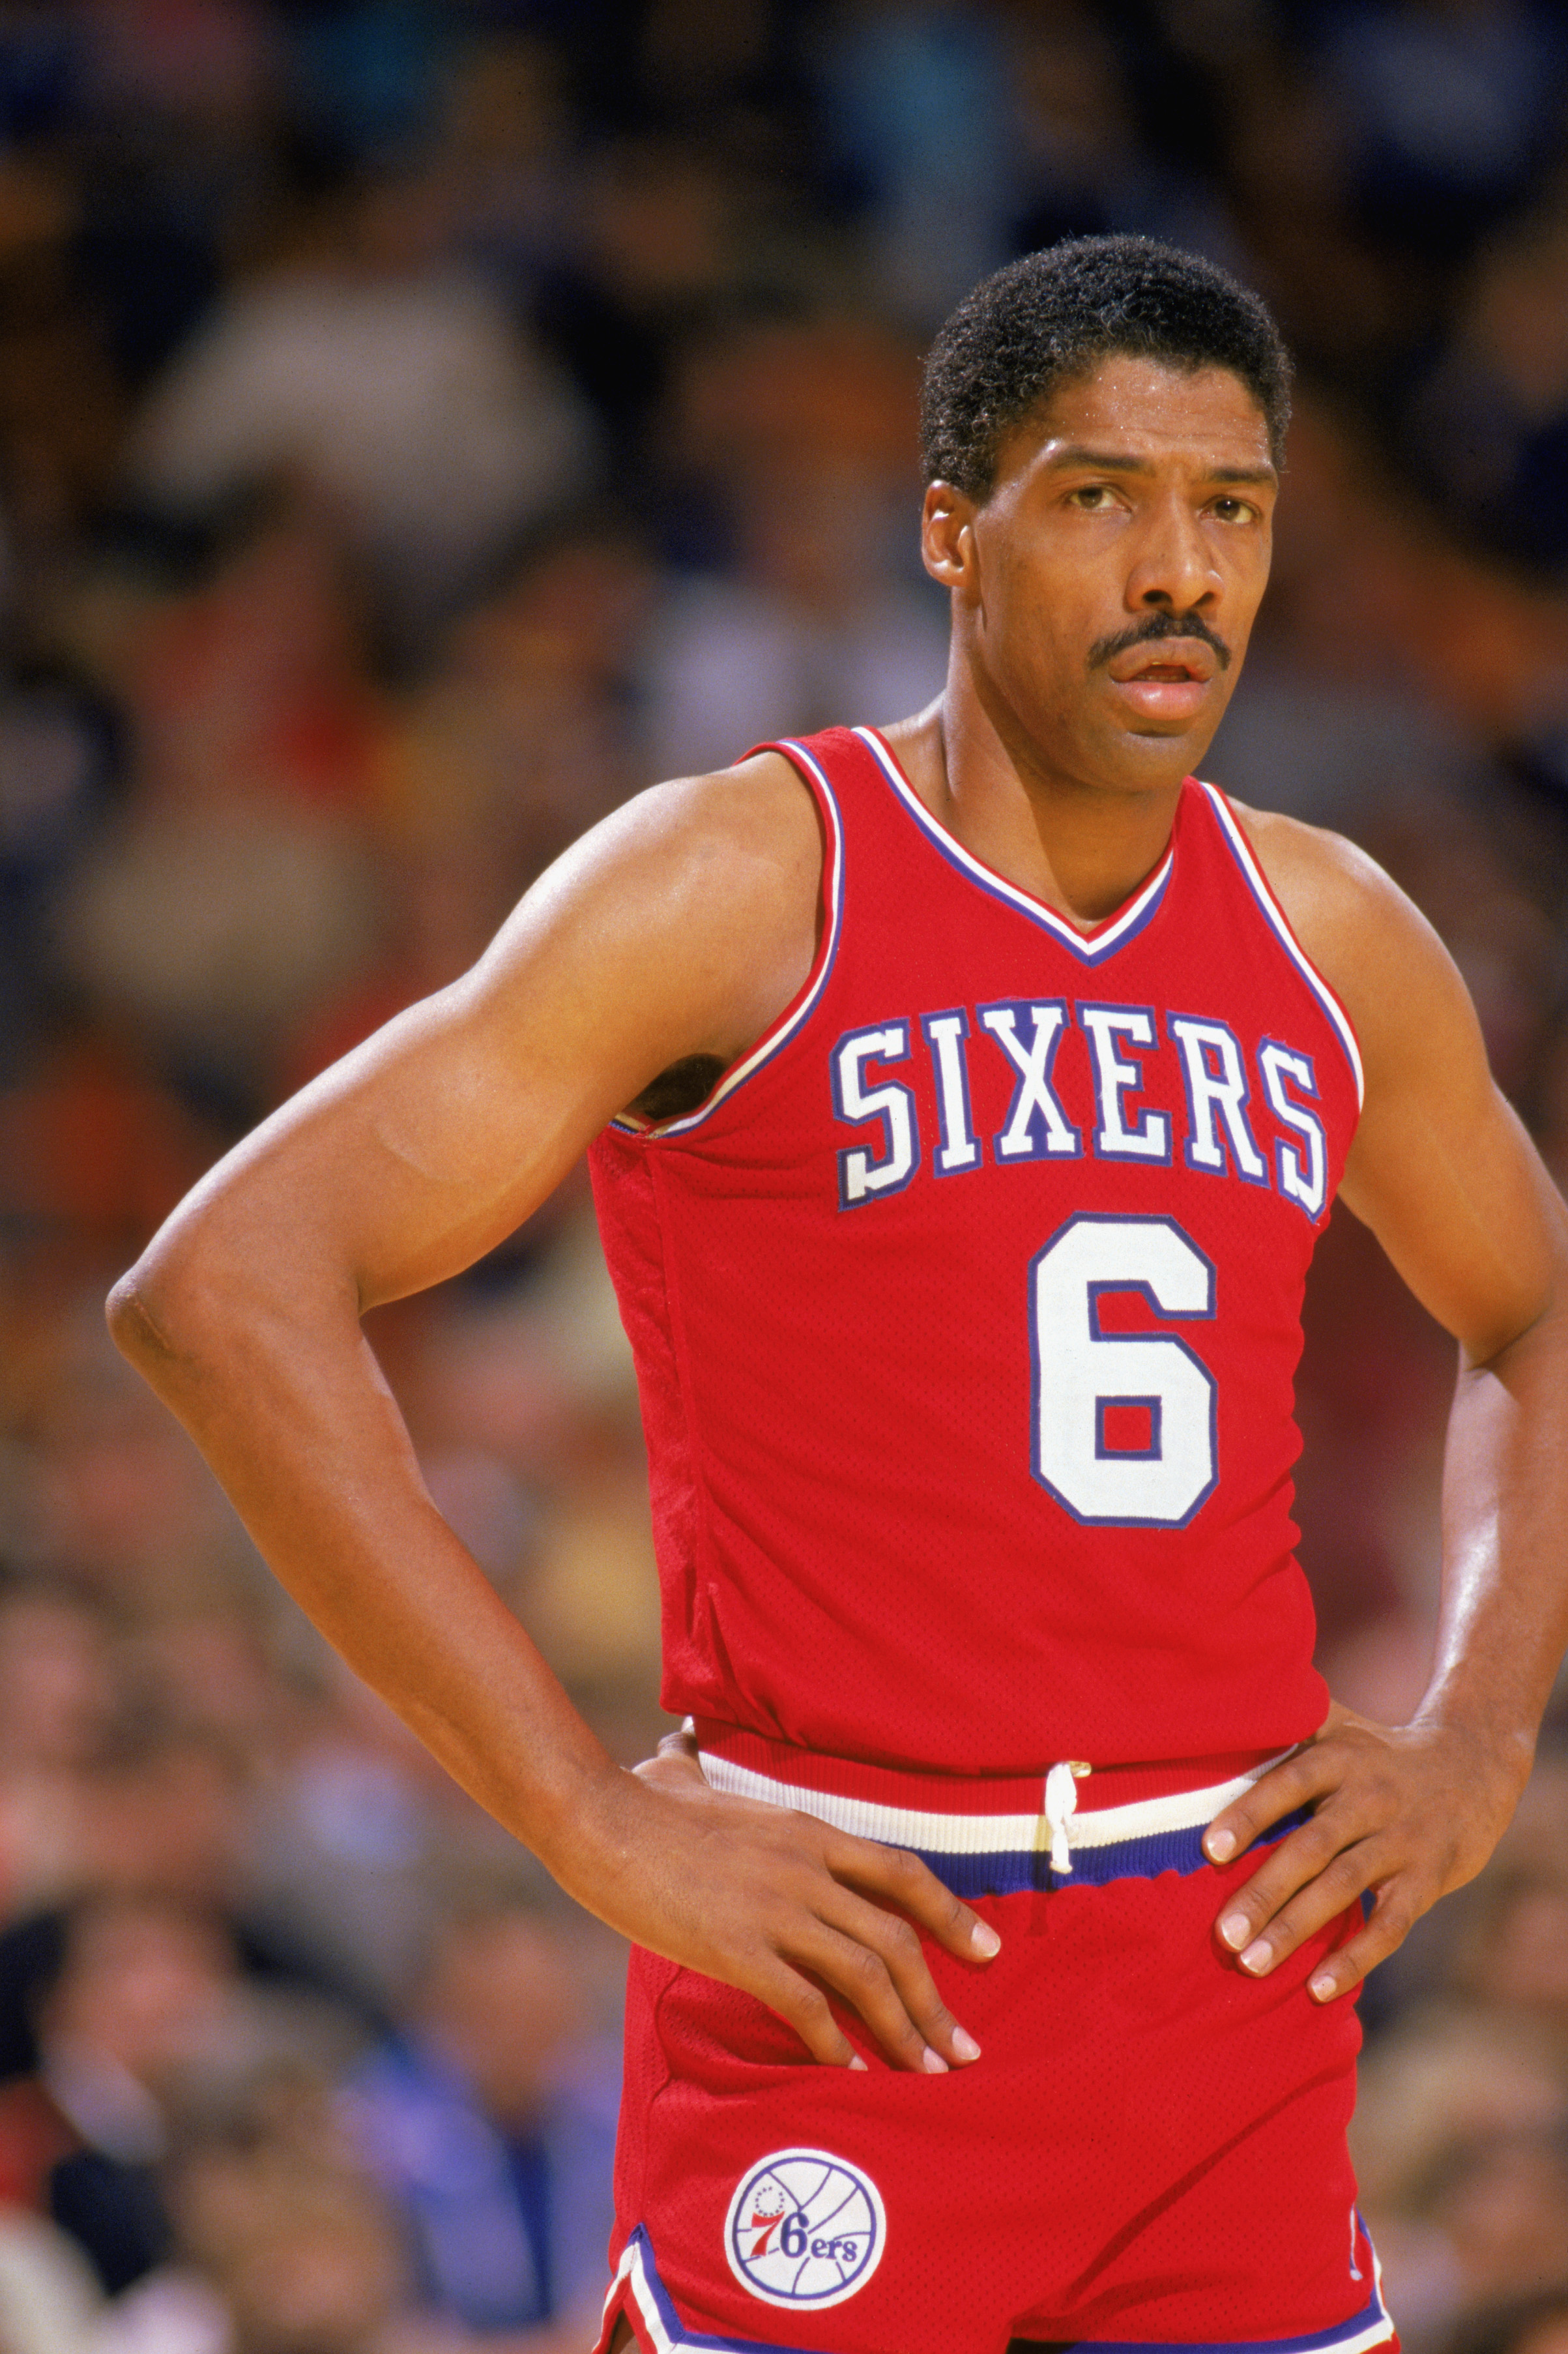 NBA Jersey Database, Denver Nuggets 1976-1977 Record: 50-32 (61%)